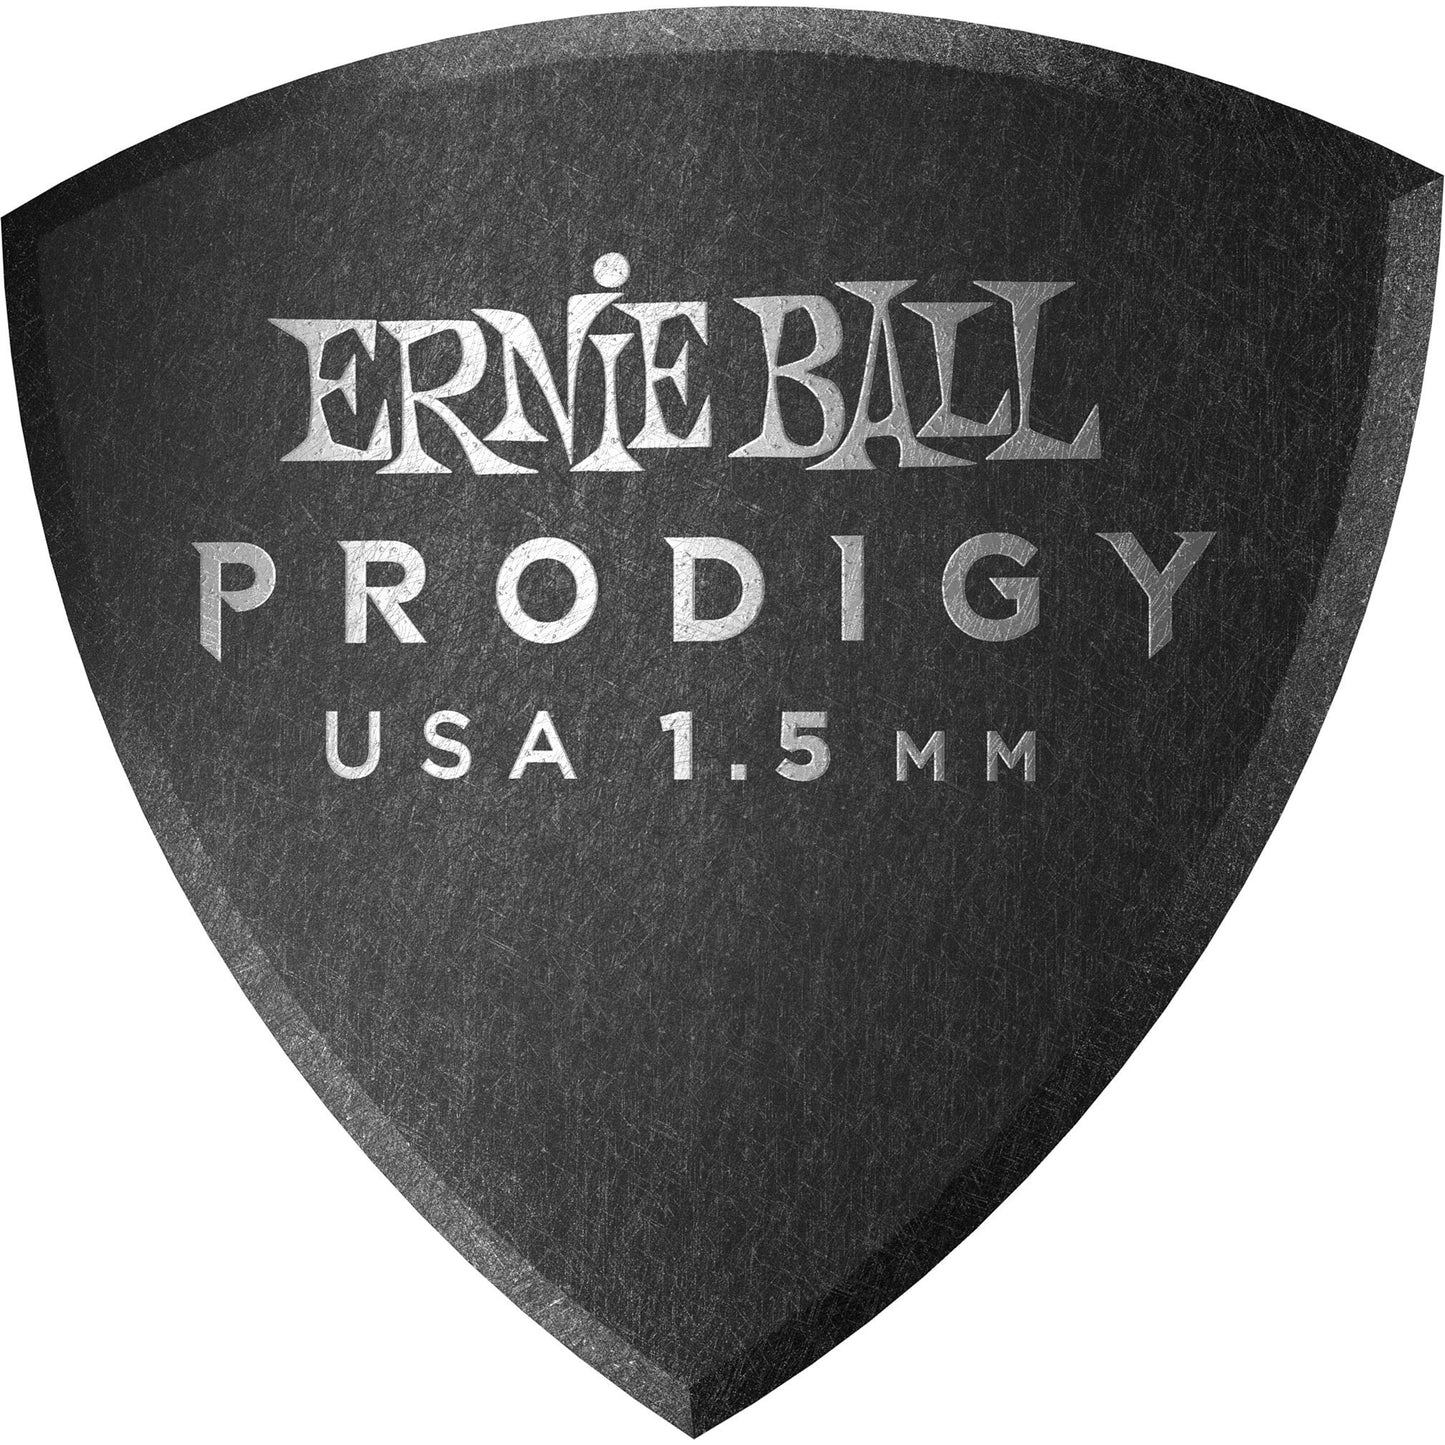 Ernie Ball Prodigy Large Shield Guitar Picks (6-Pack), Black, 1.5mm